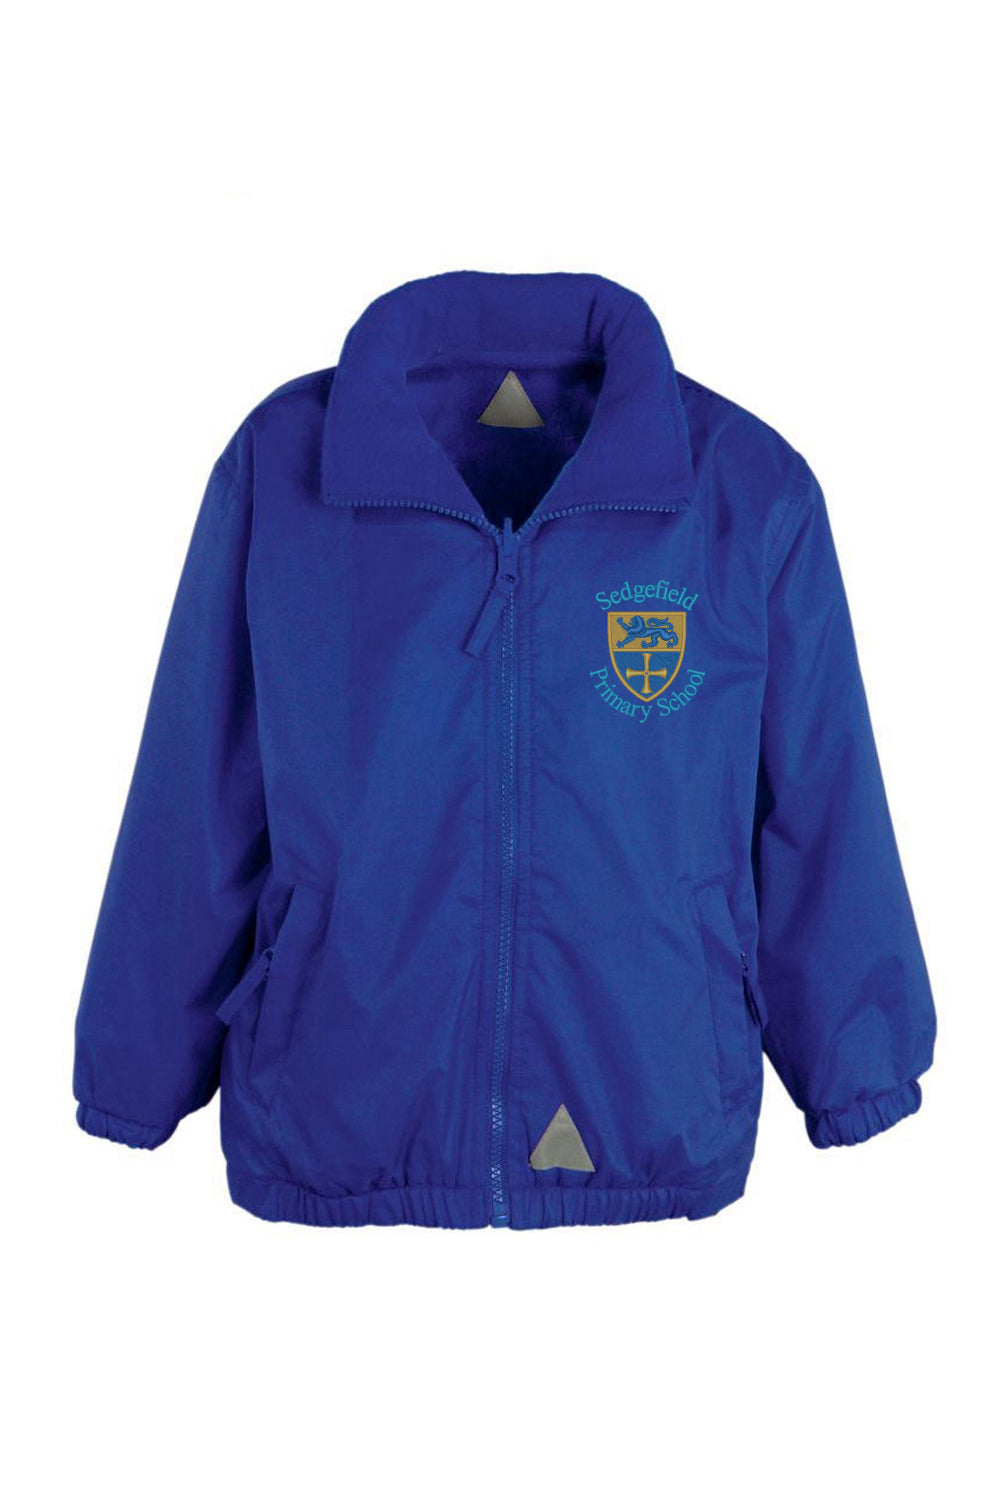 Sedgefield Primary Royal Blue Shower Jacket